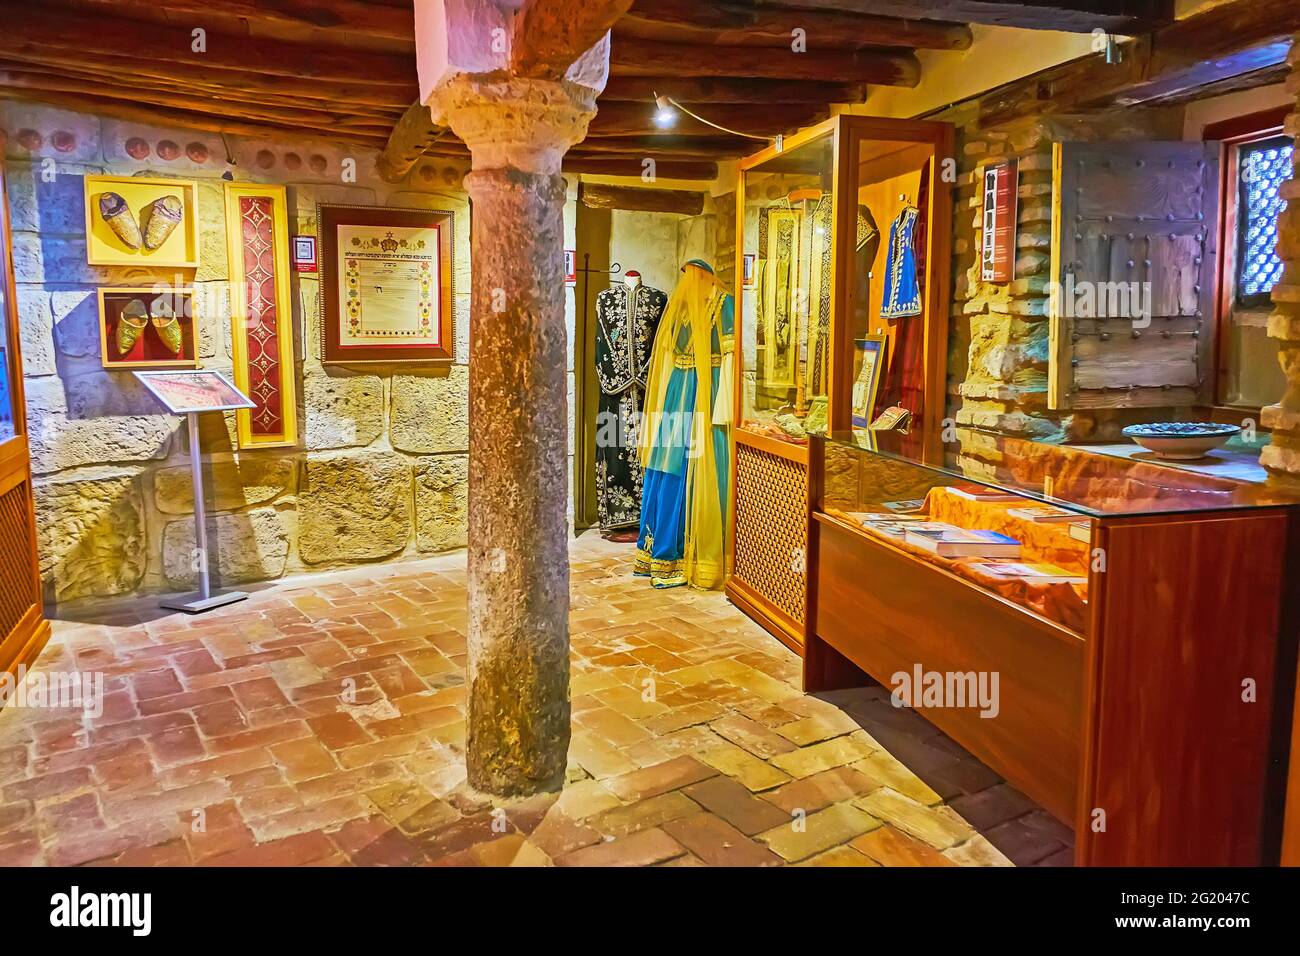 CORDOBA, SPAIN - SEPTEMBER 30, 2019: The ethnographic exhibition in Casa de Sefarad with historic attire and accessories, Juderia (Jewish Quarter), on Stock Photo